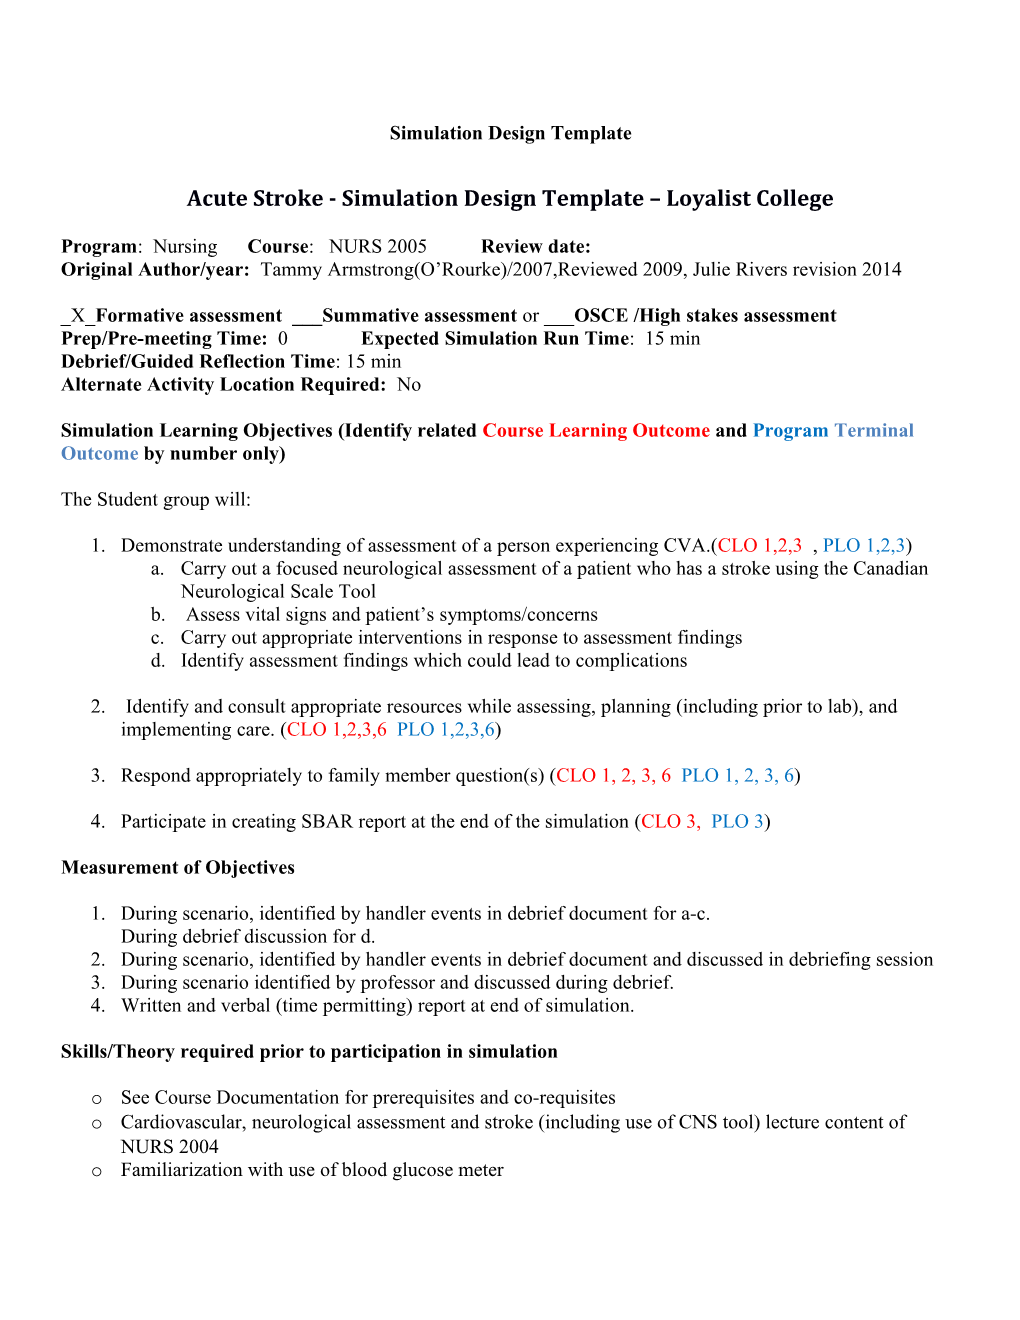 Acute Stroke - Simulation Design Template Loyalist College